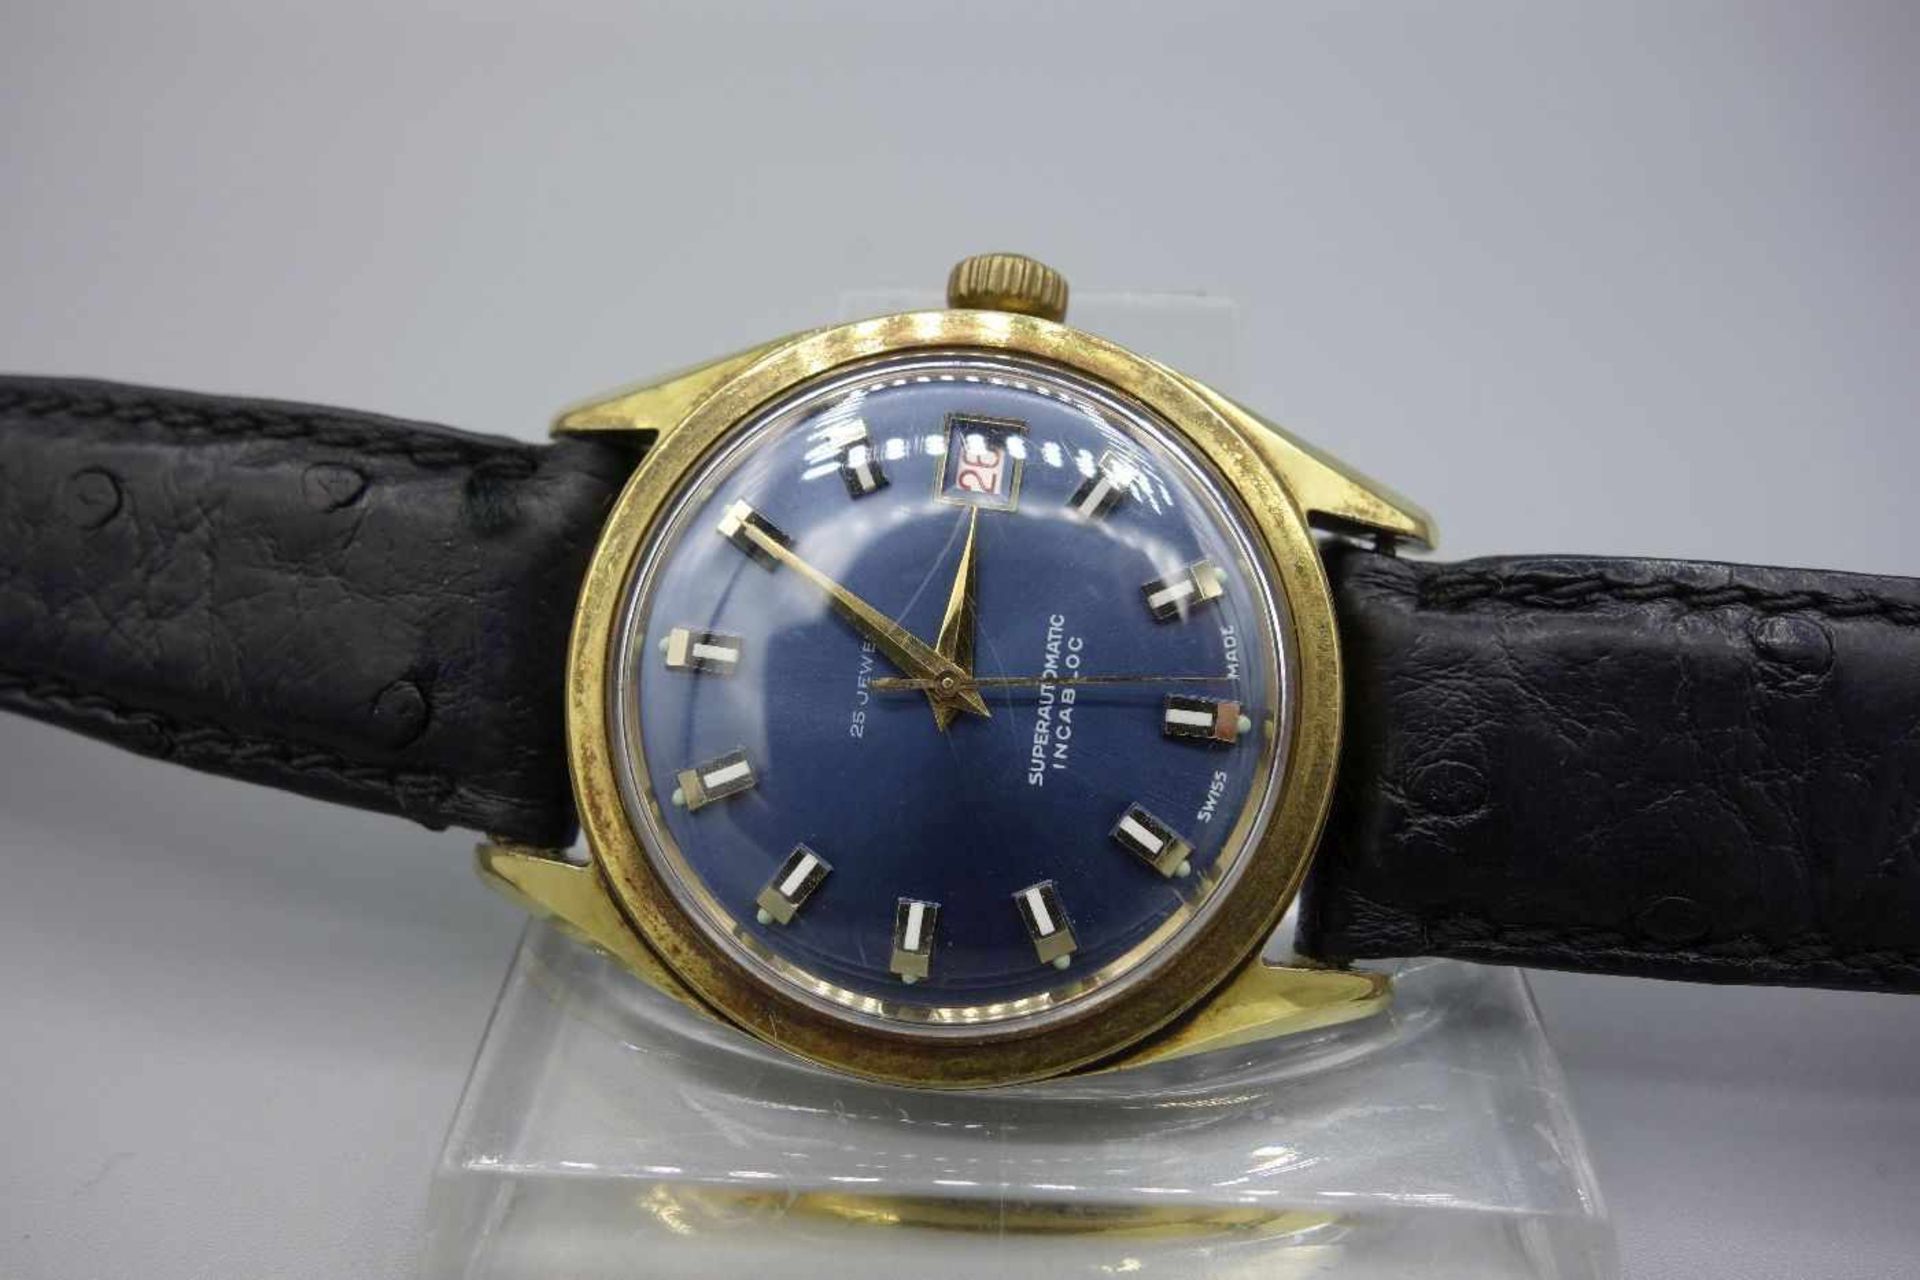 VINTAGE ARMBANDUHR - TECHNOS / wristwatch, Mitte 20. Jh., Automatik-Uhr, Manufaktur Gunzinger Freres - Image 3 of 5